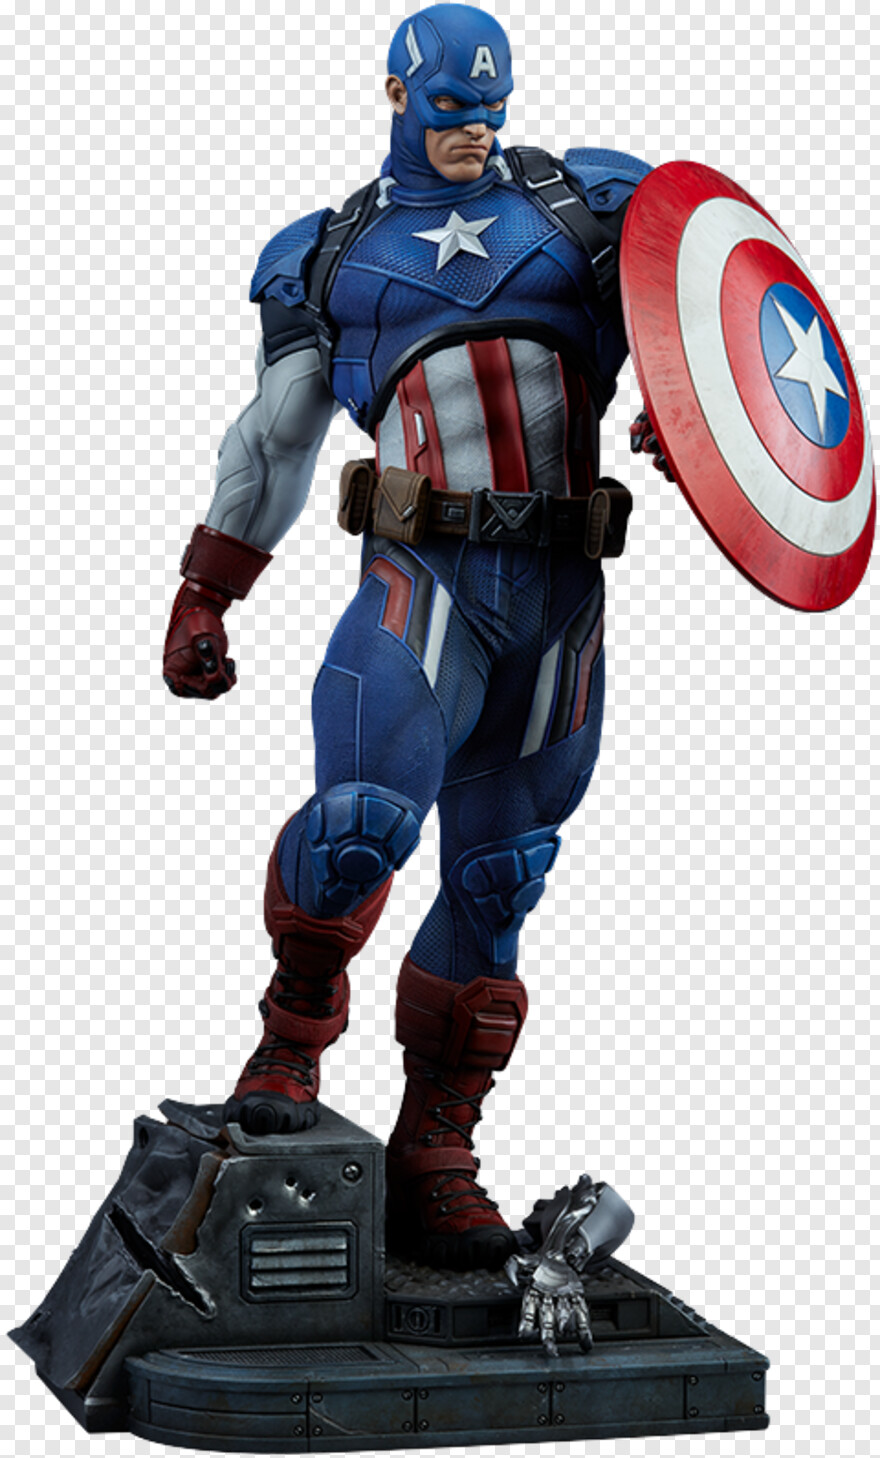  Capitan America, Captain America Civil War, Captain America, Bank Of America, America, South America